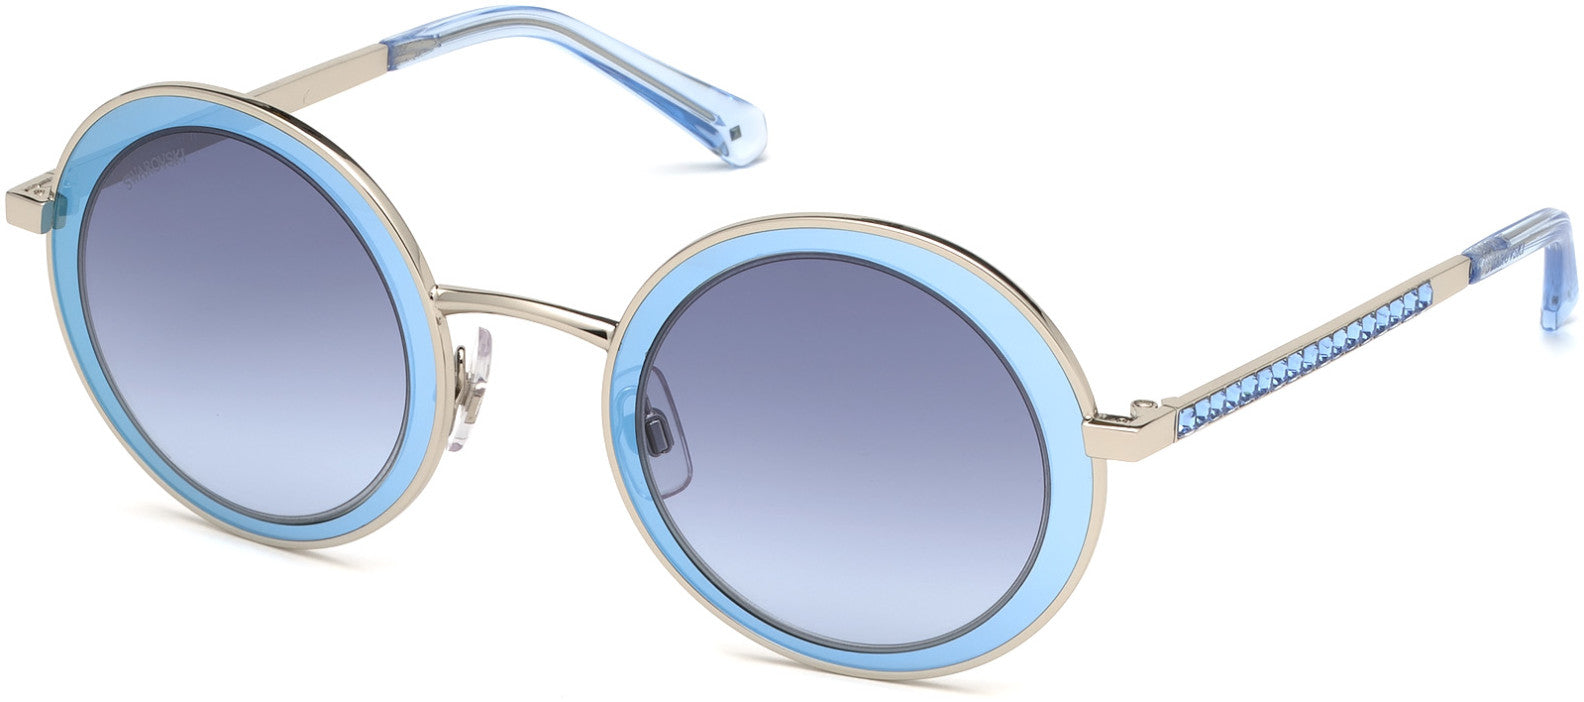 Swarovski SK0199 Round Sunglasses 16W-16W - Shiny Palladium / Gradient Blue Lenses